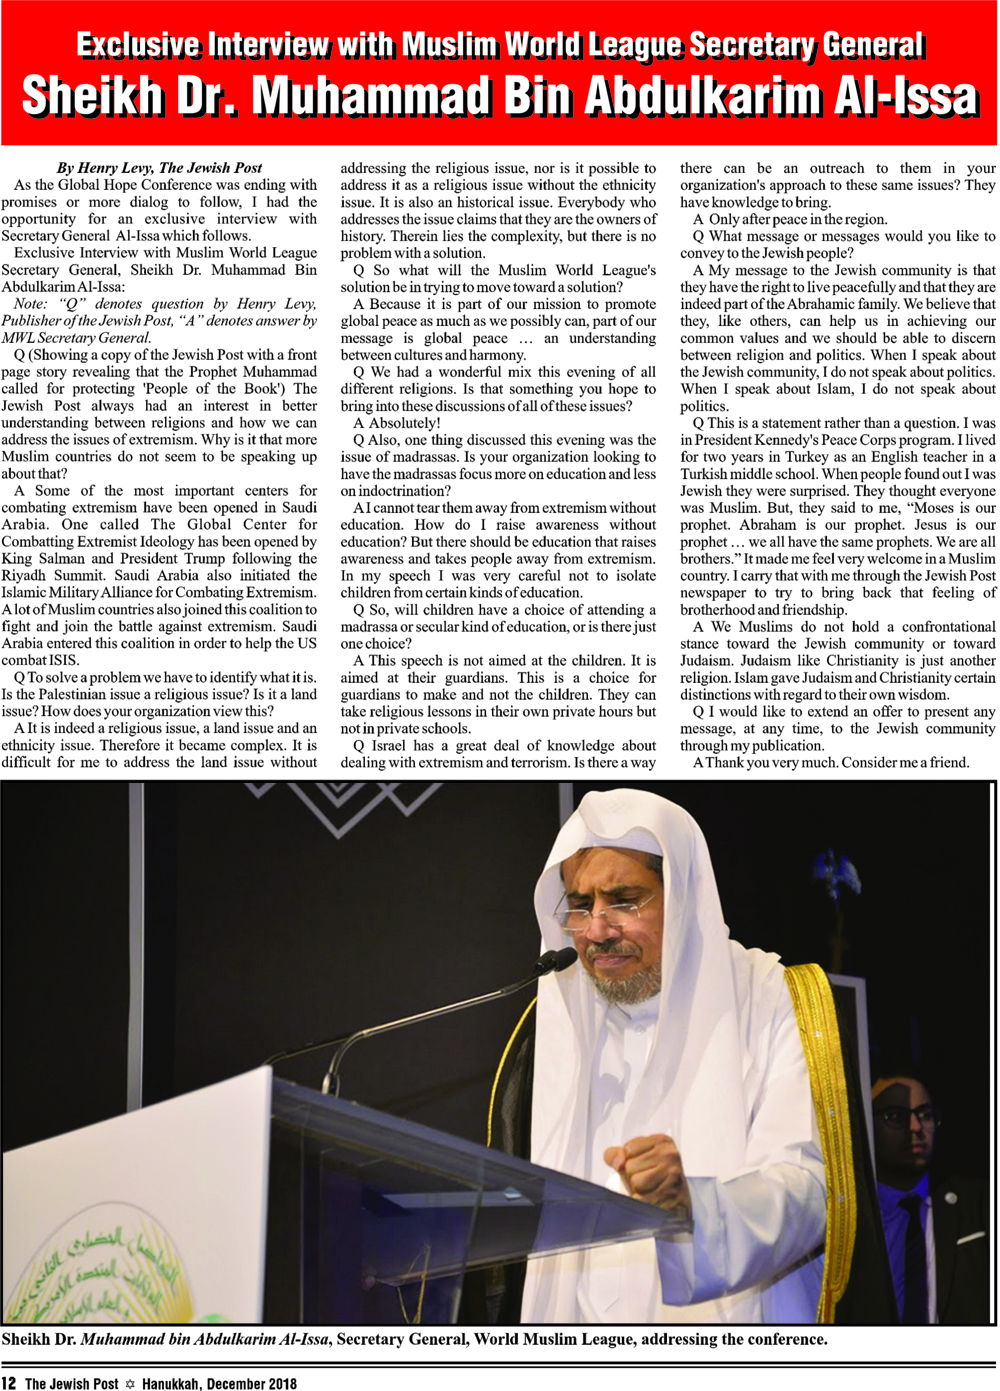 Sheikh Dr. Muhammad Bin Abdulkarim Al-Issa